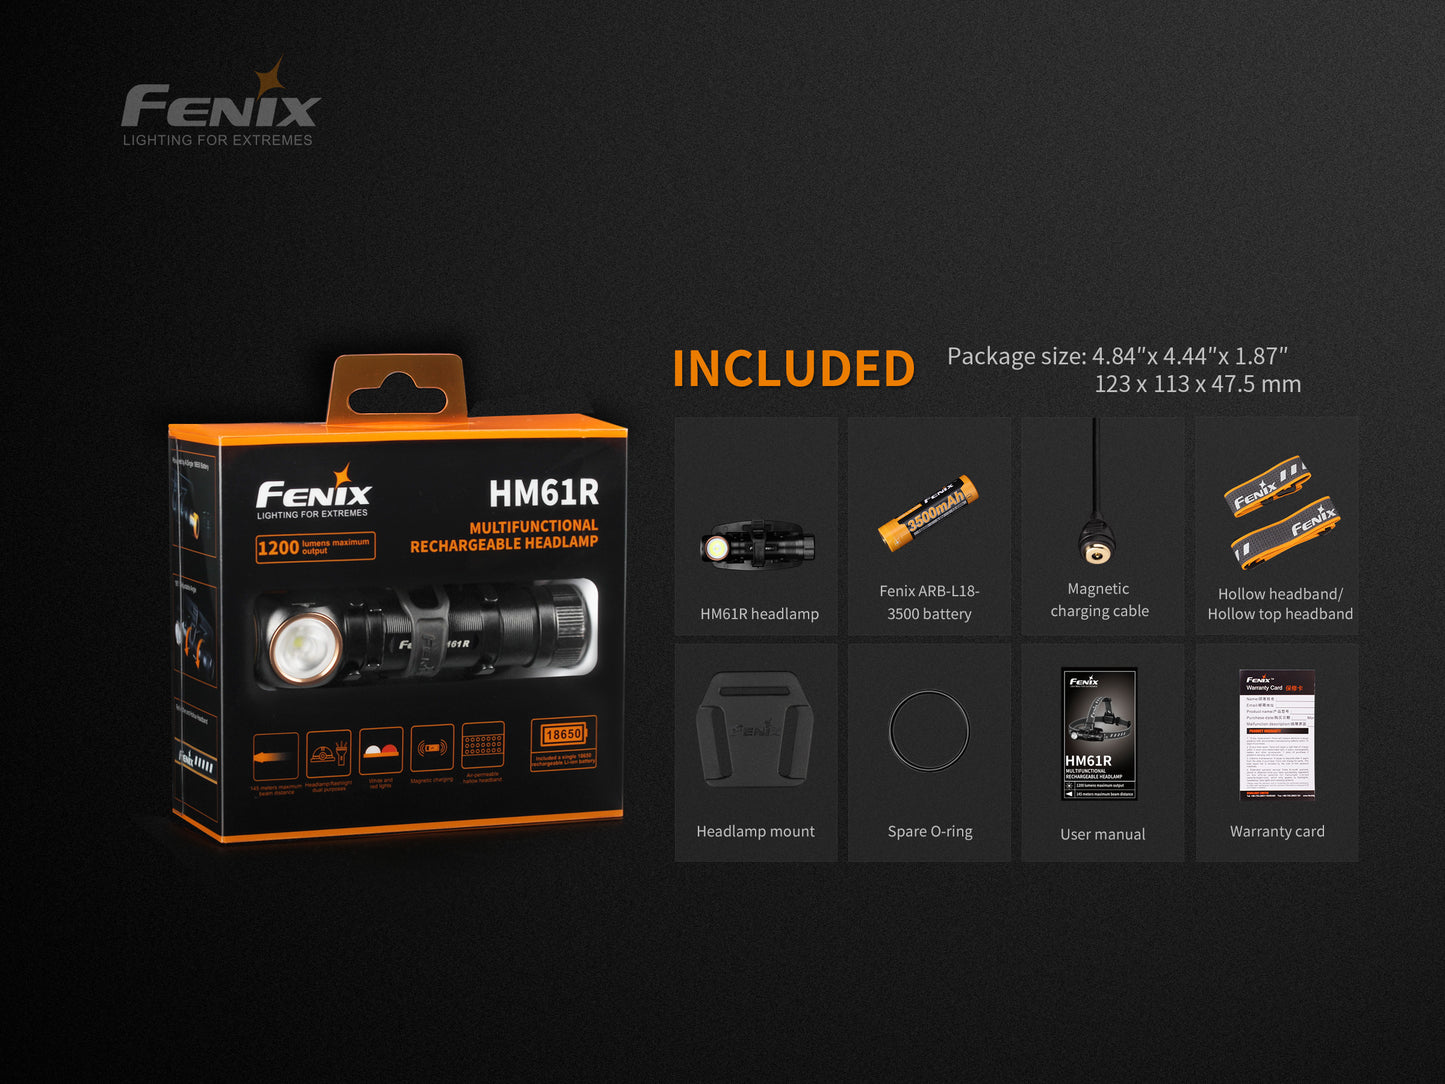 Fenix HM61R Multifunctional Rechageable Headlamp